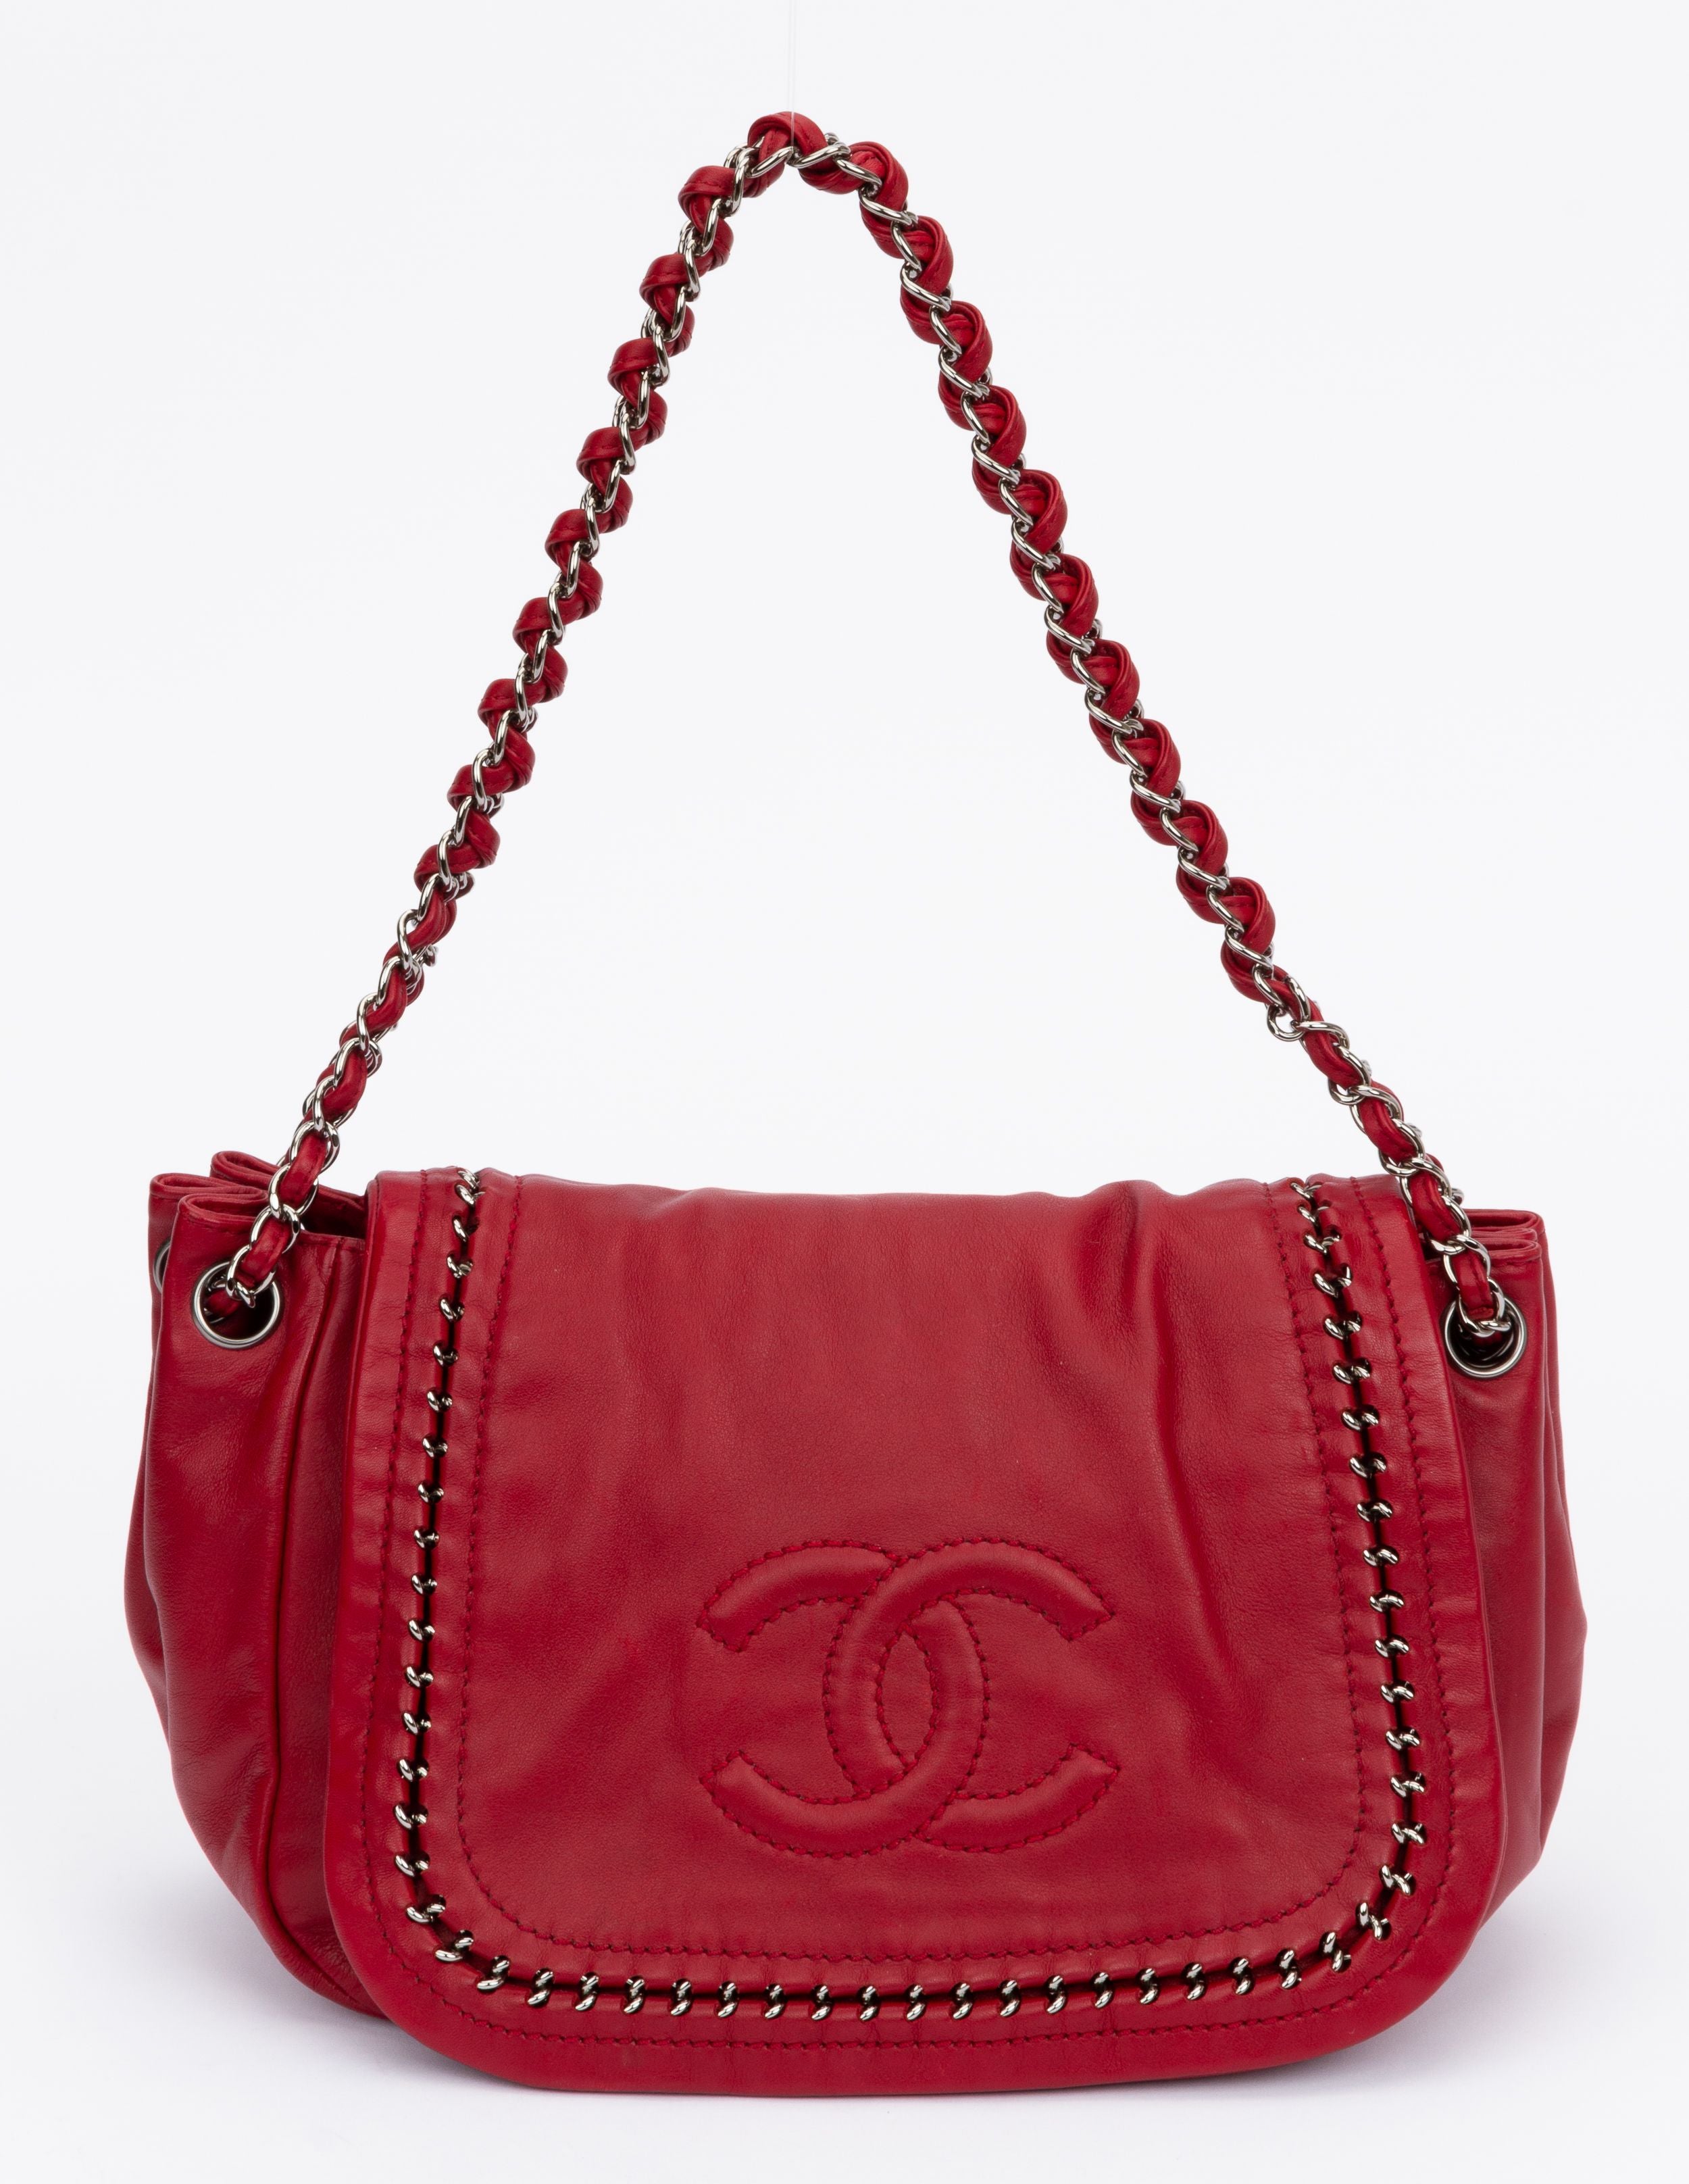 Chanel Cherry Red Inlay Chain Handbag - Vintage Lux